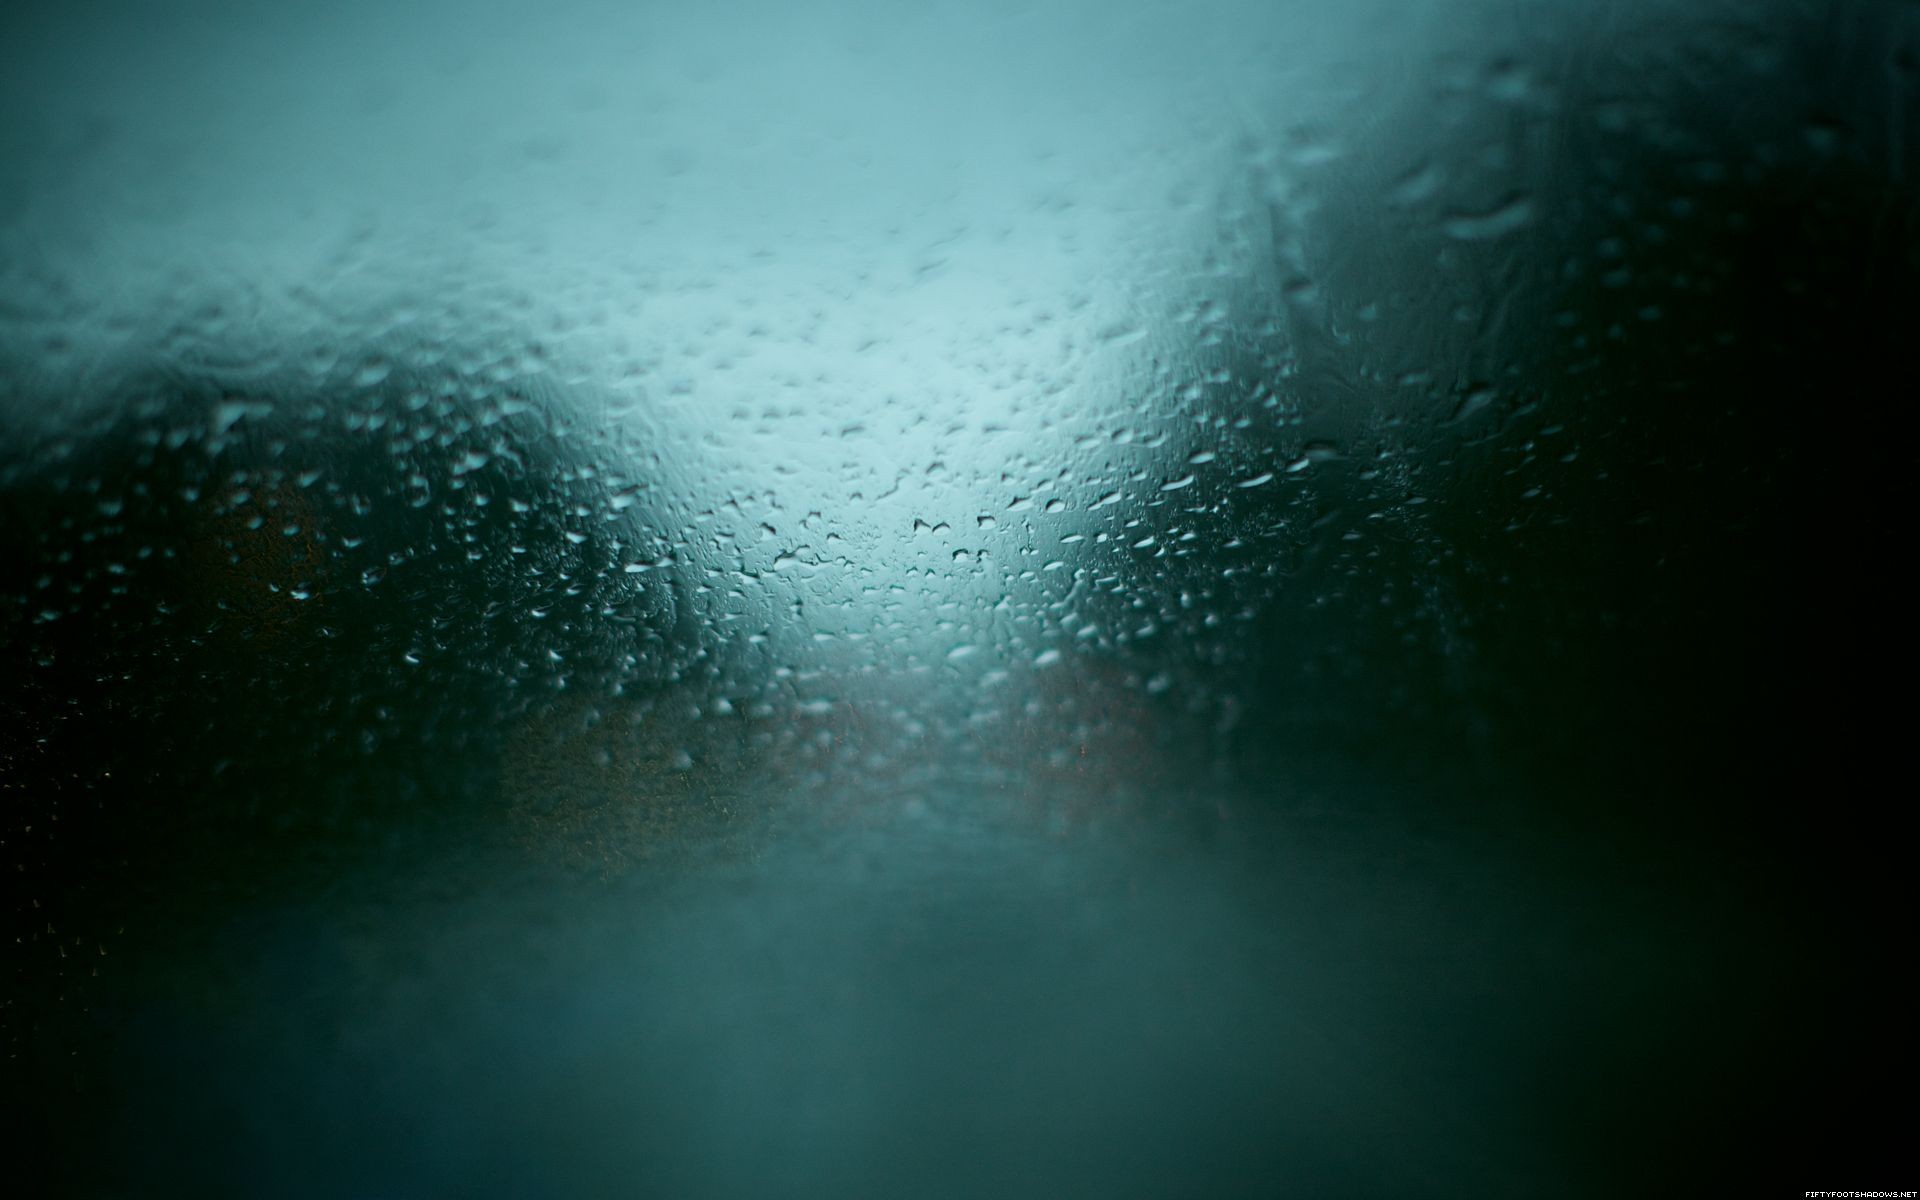 Rain Water On Glass Blurred 1920x1200